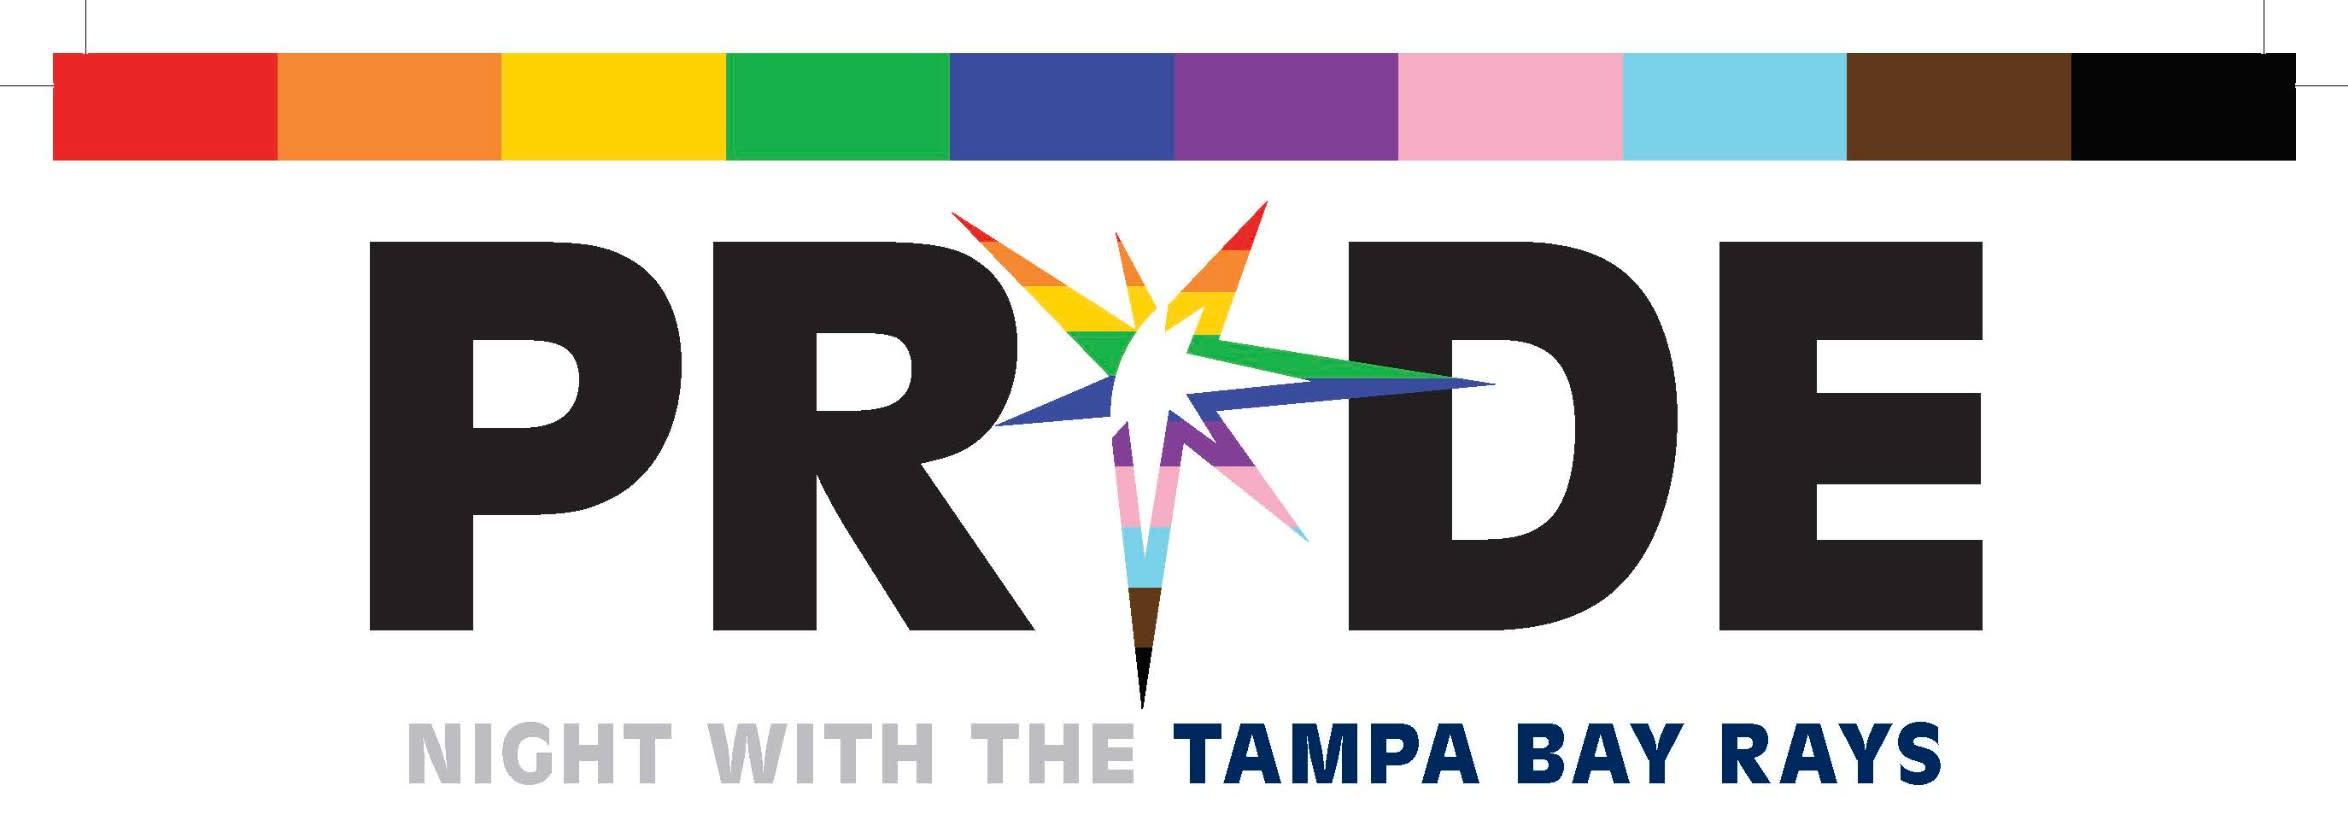 Tampa Bay Rays Pride Night Event Registration